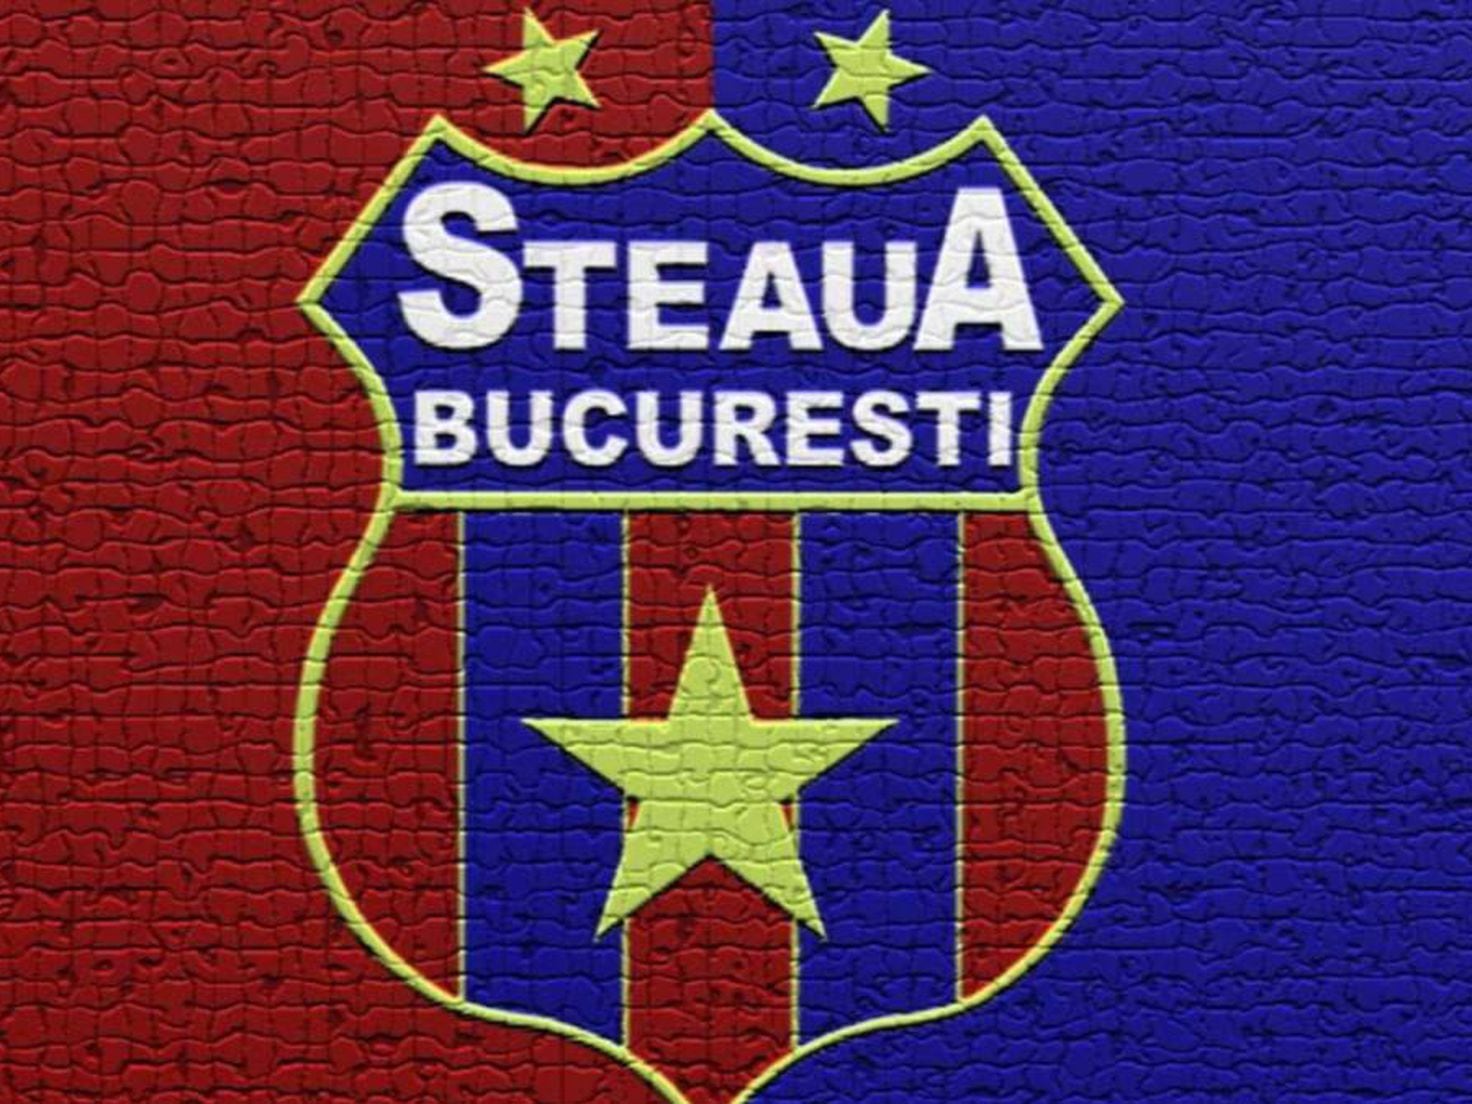 CSA Steaua București 2 » rosters :: Volleybox